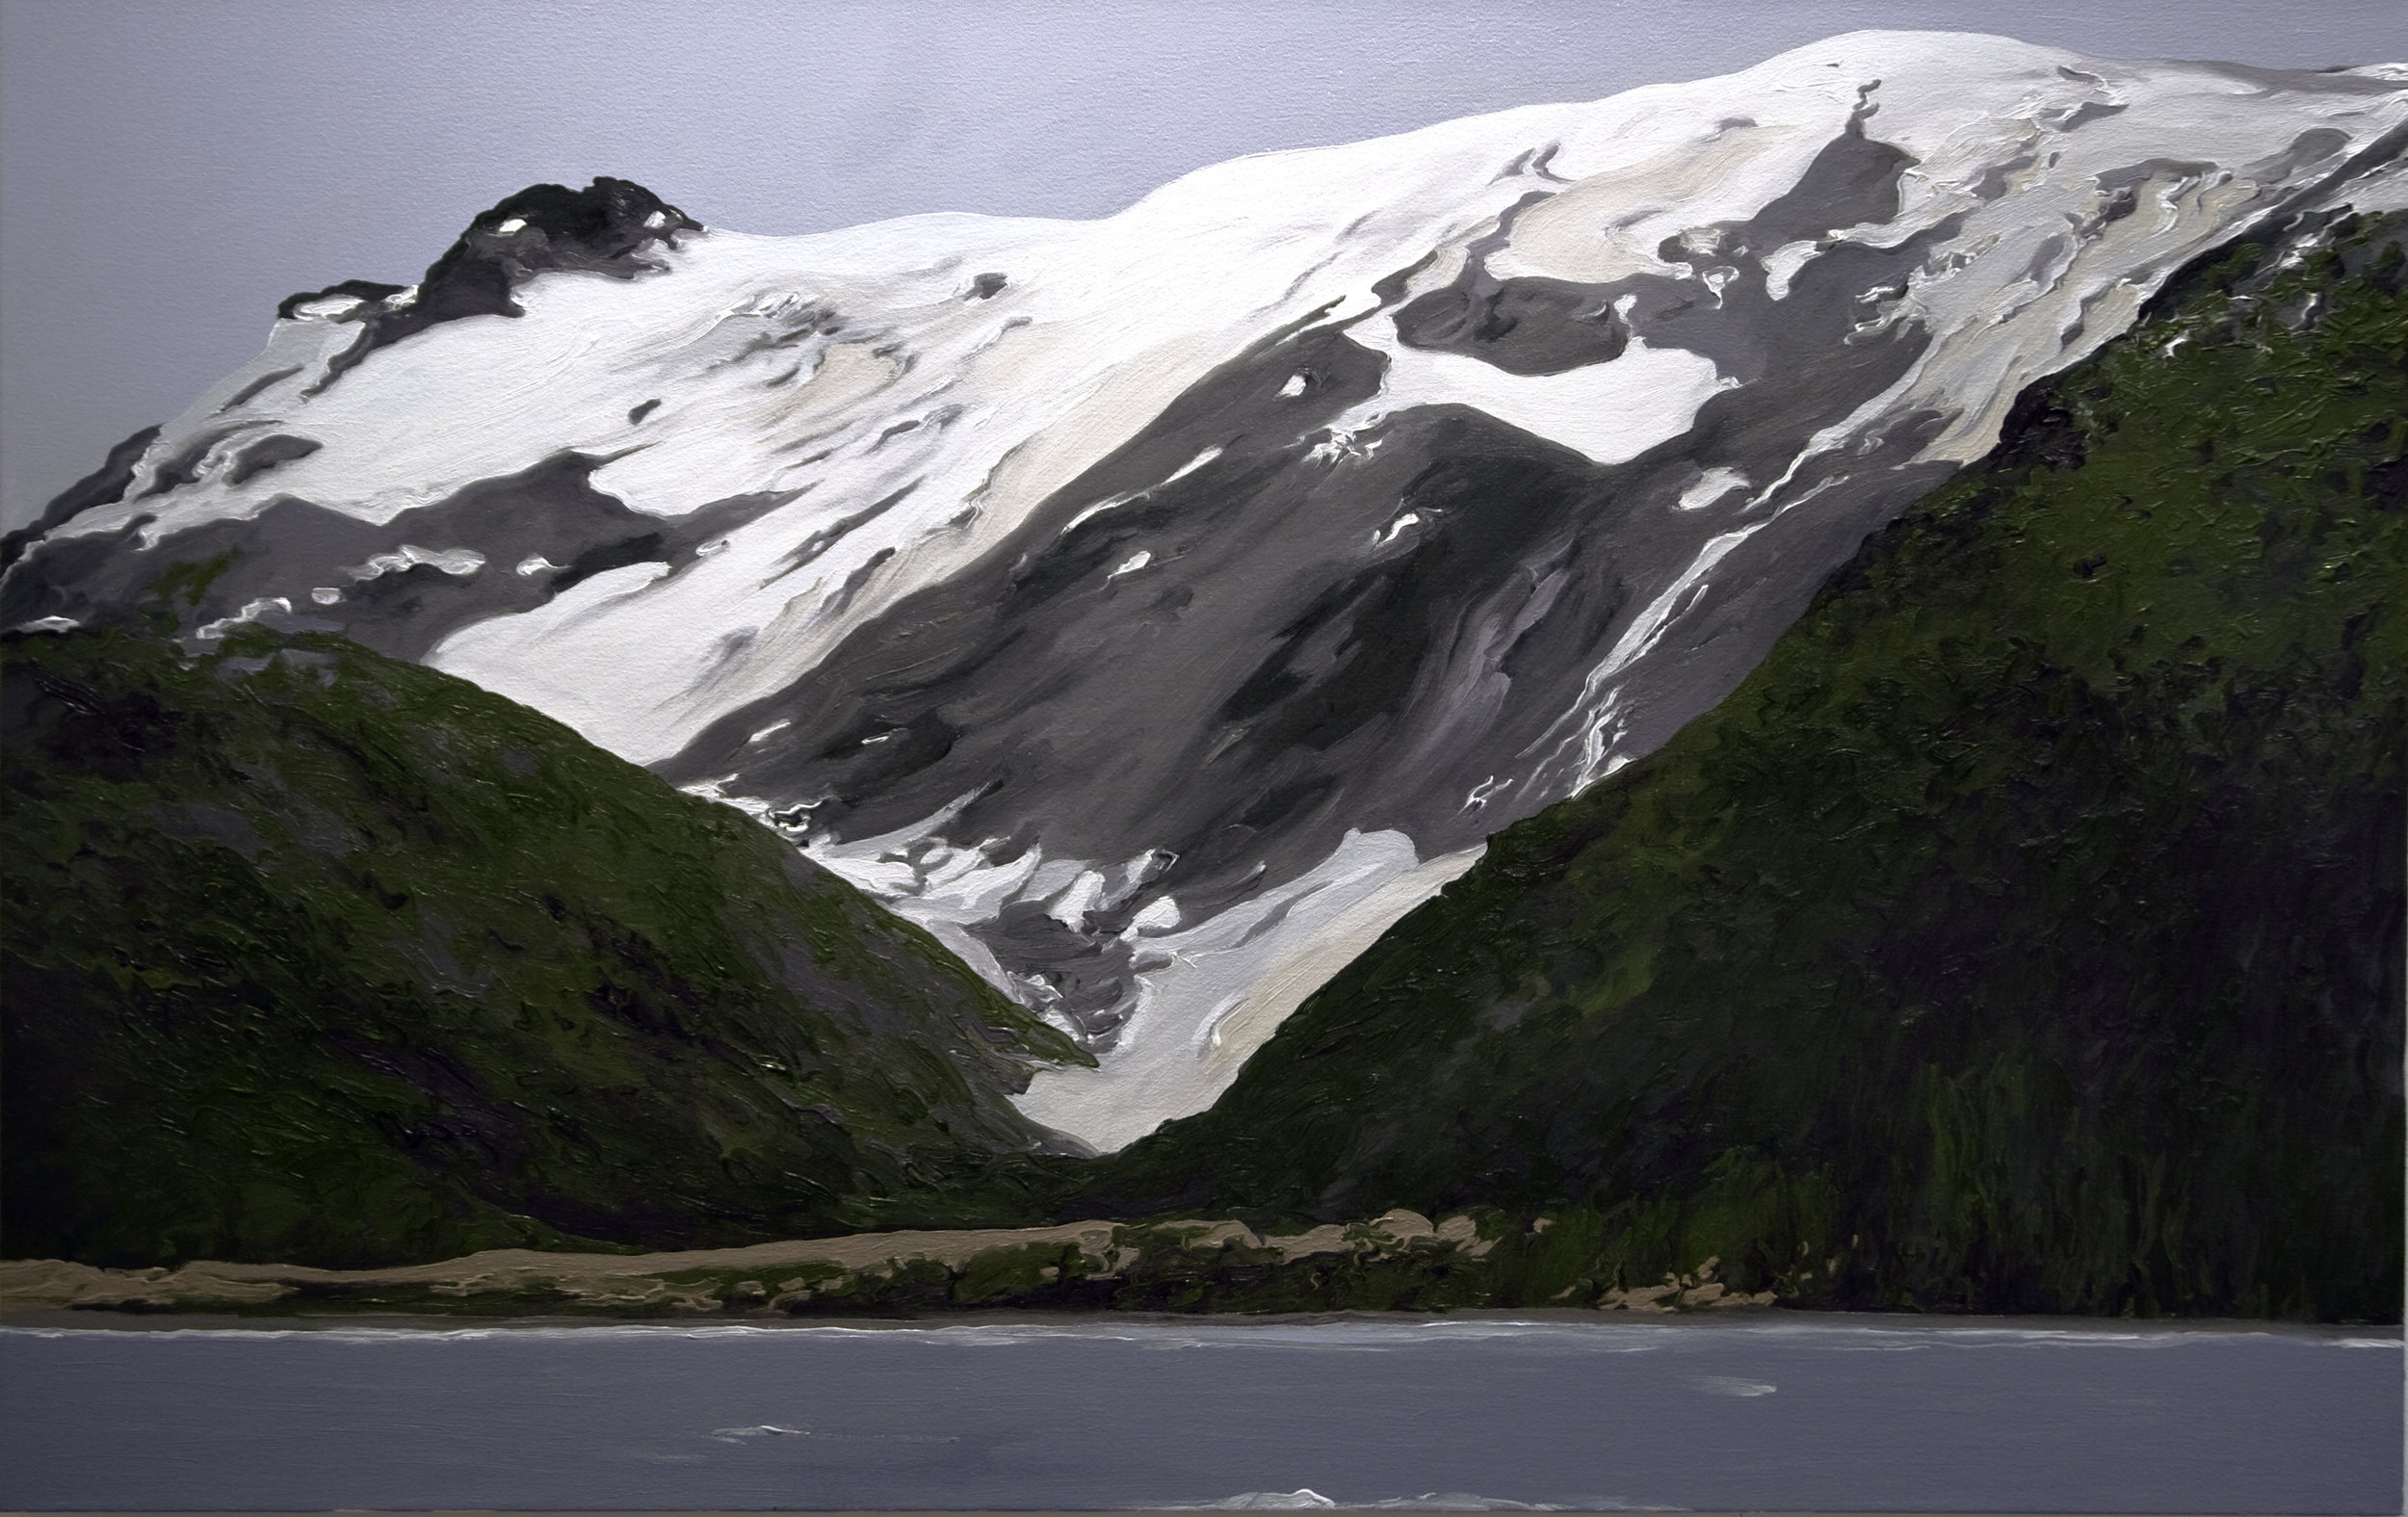 Toboggan Glacier #2, 2000, after Bruce Molnia